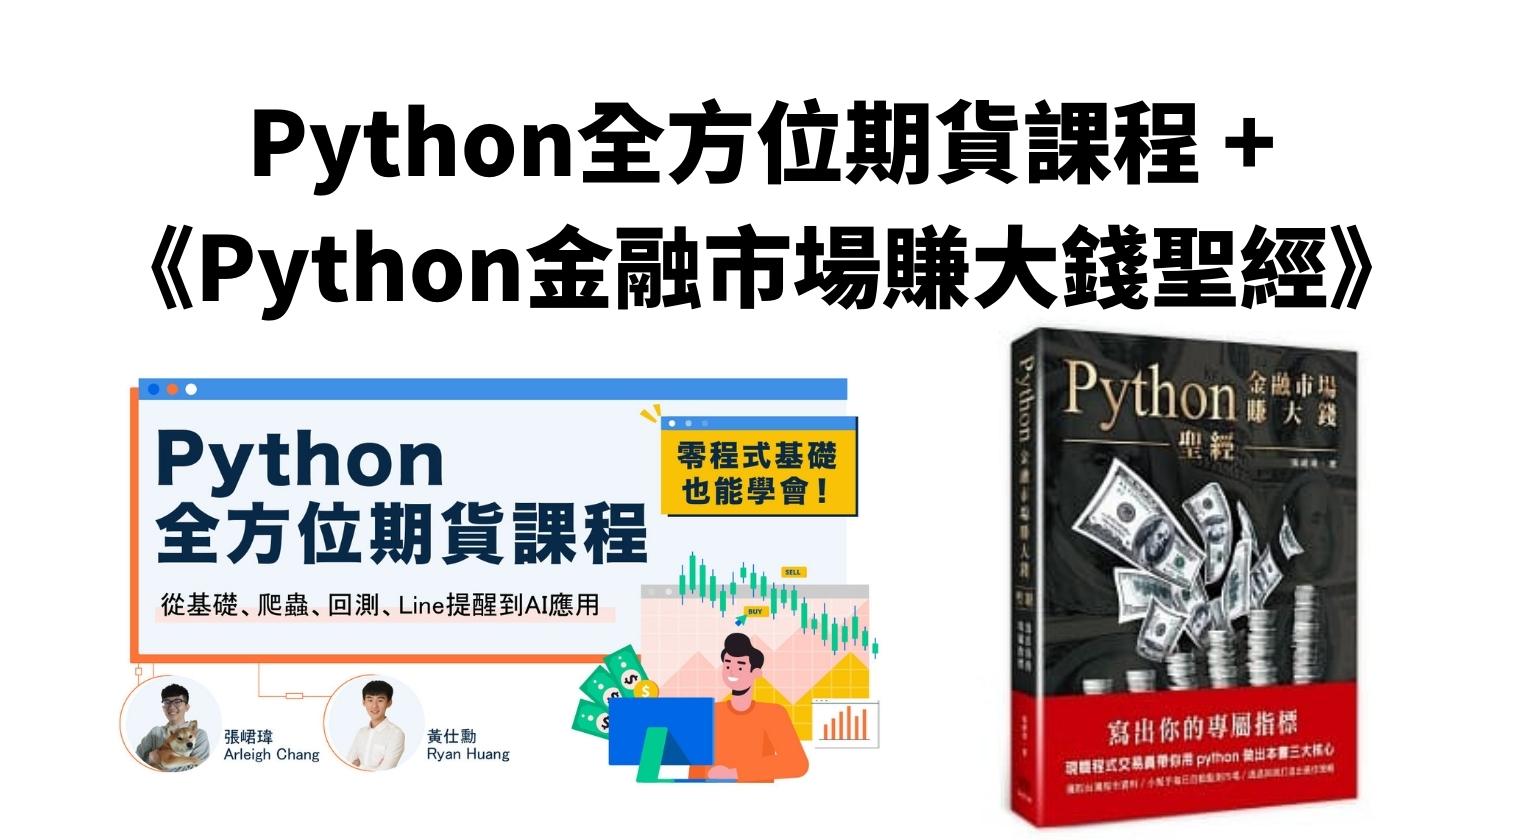 Python全方位期貨課程 +《Python金融市場賺大錢聖經》紙本書